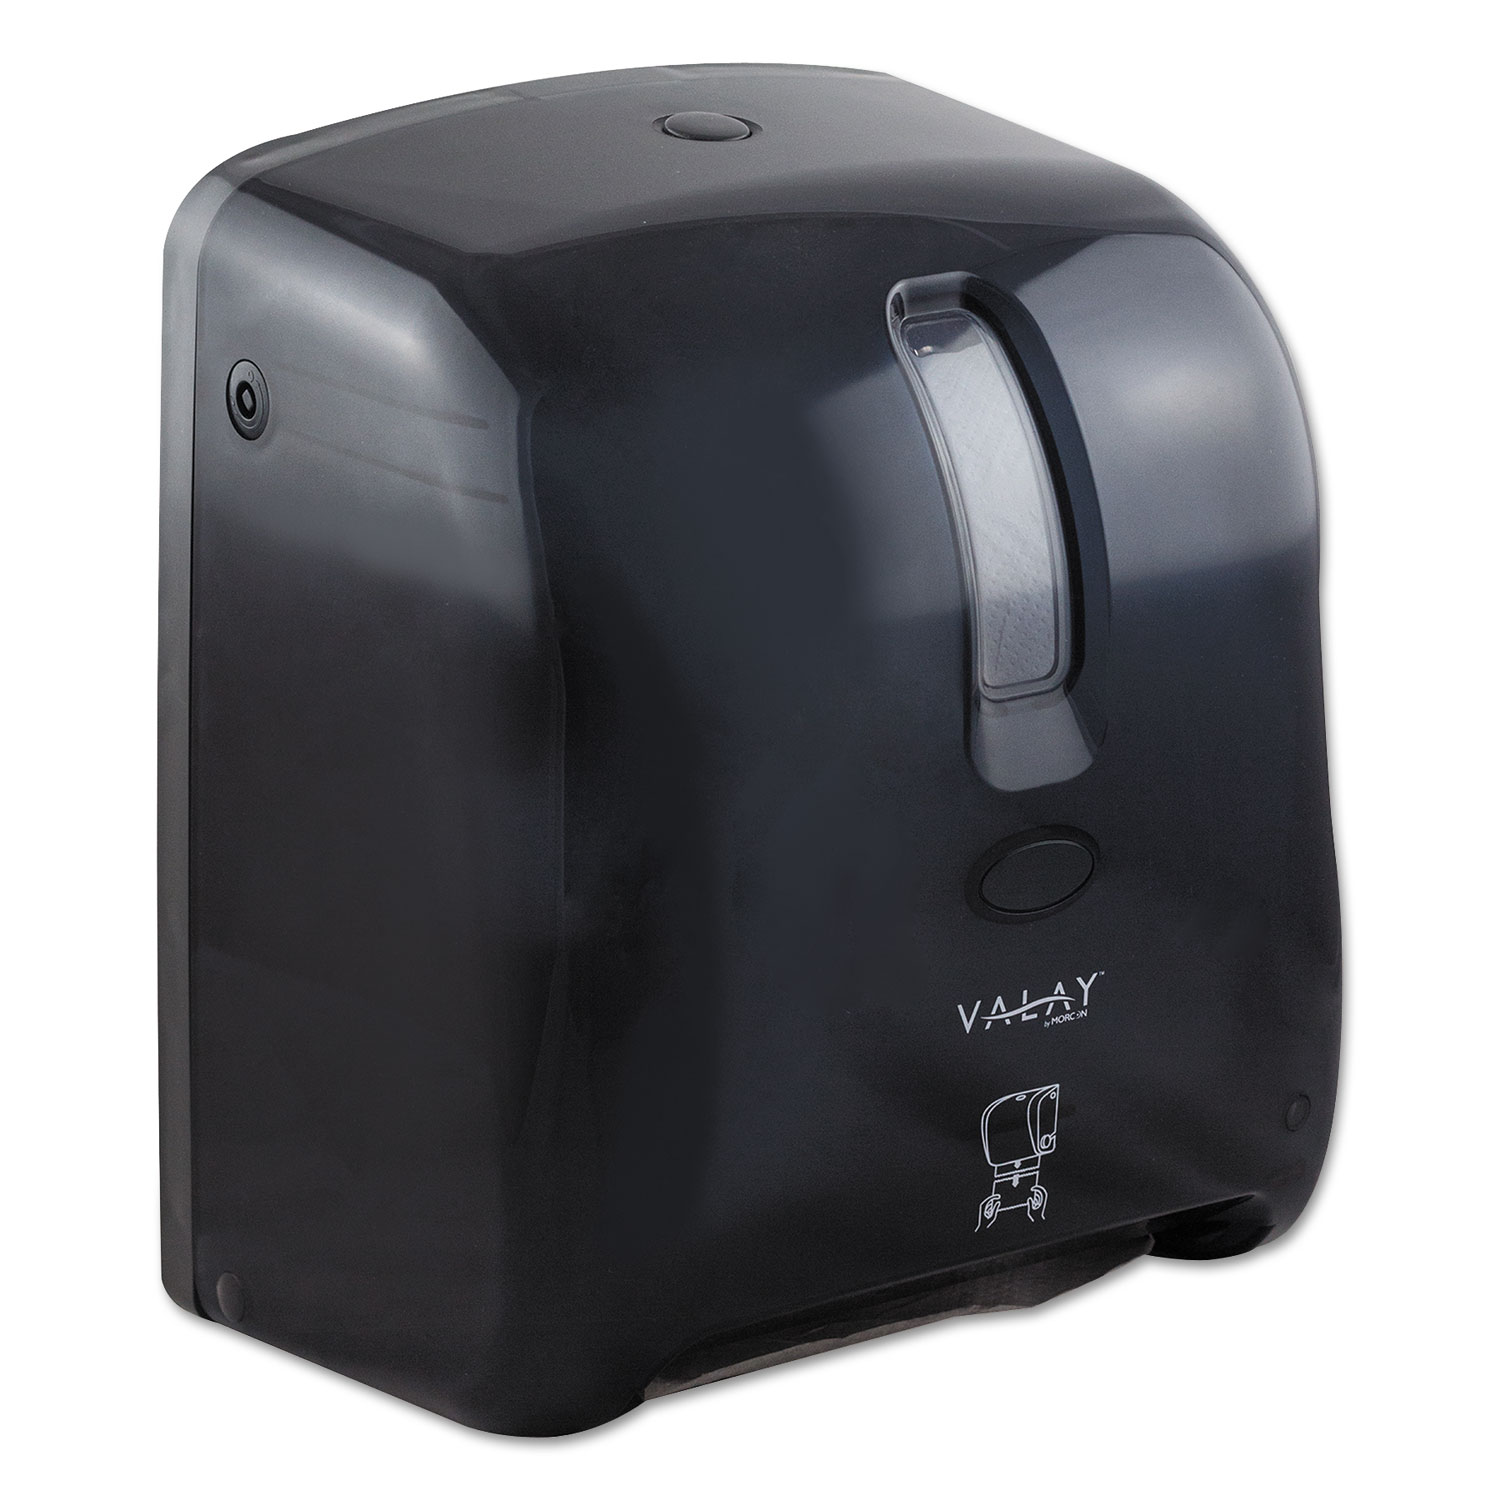  Morcon Tissue VT1008 Valay Proprietary Roll Towel Dispenser, 11.75 x 14 x 8.5, Black (MORVT1008) 